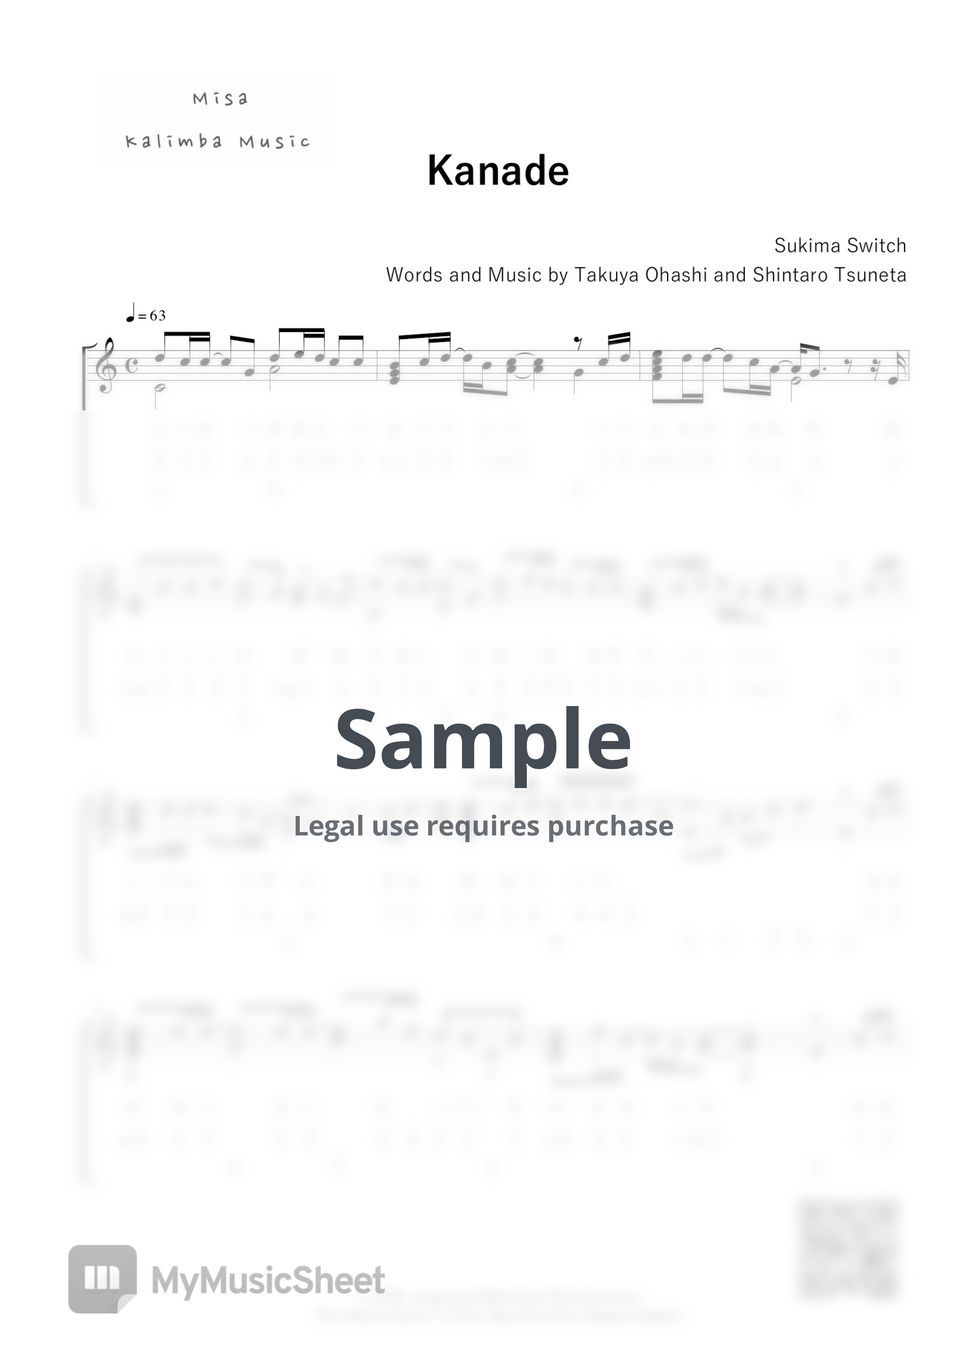 Sukima Switch - Kanade / Kalimba Tab / Number Notation by Misa / Kalimba Music